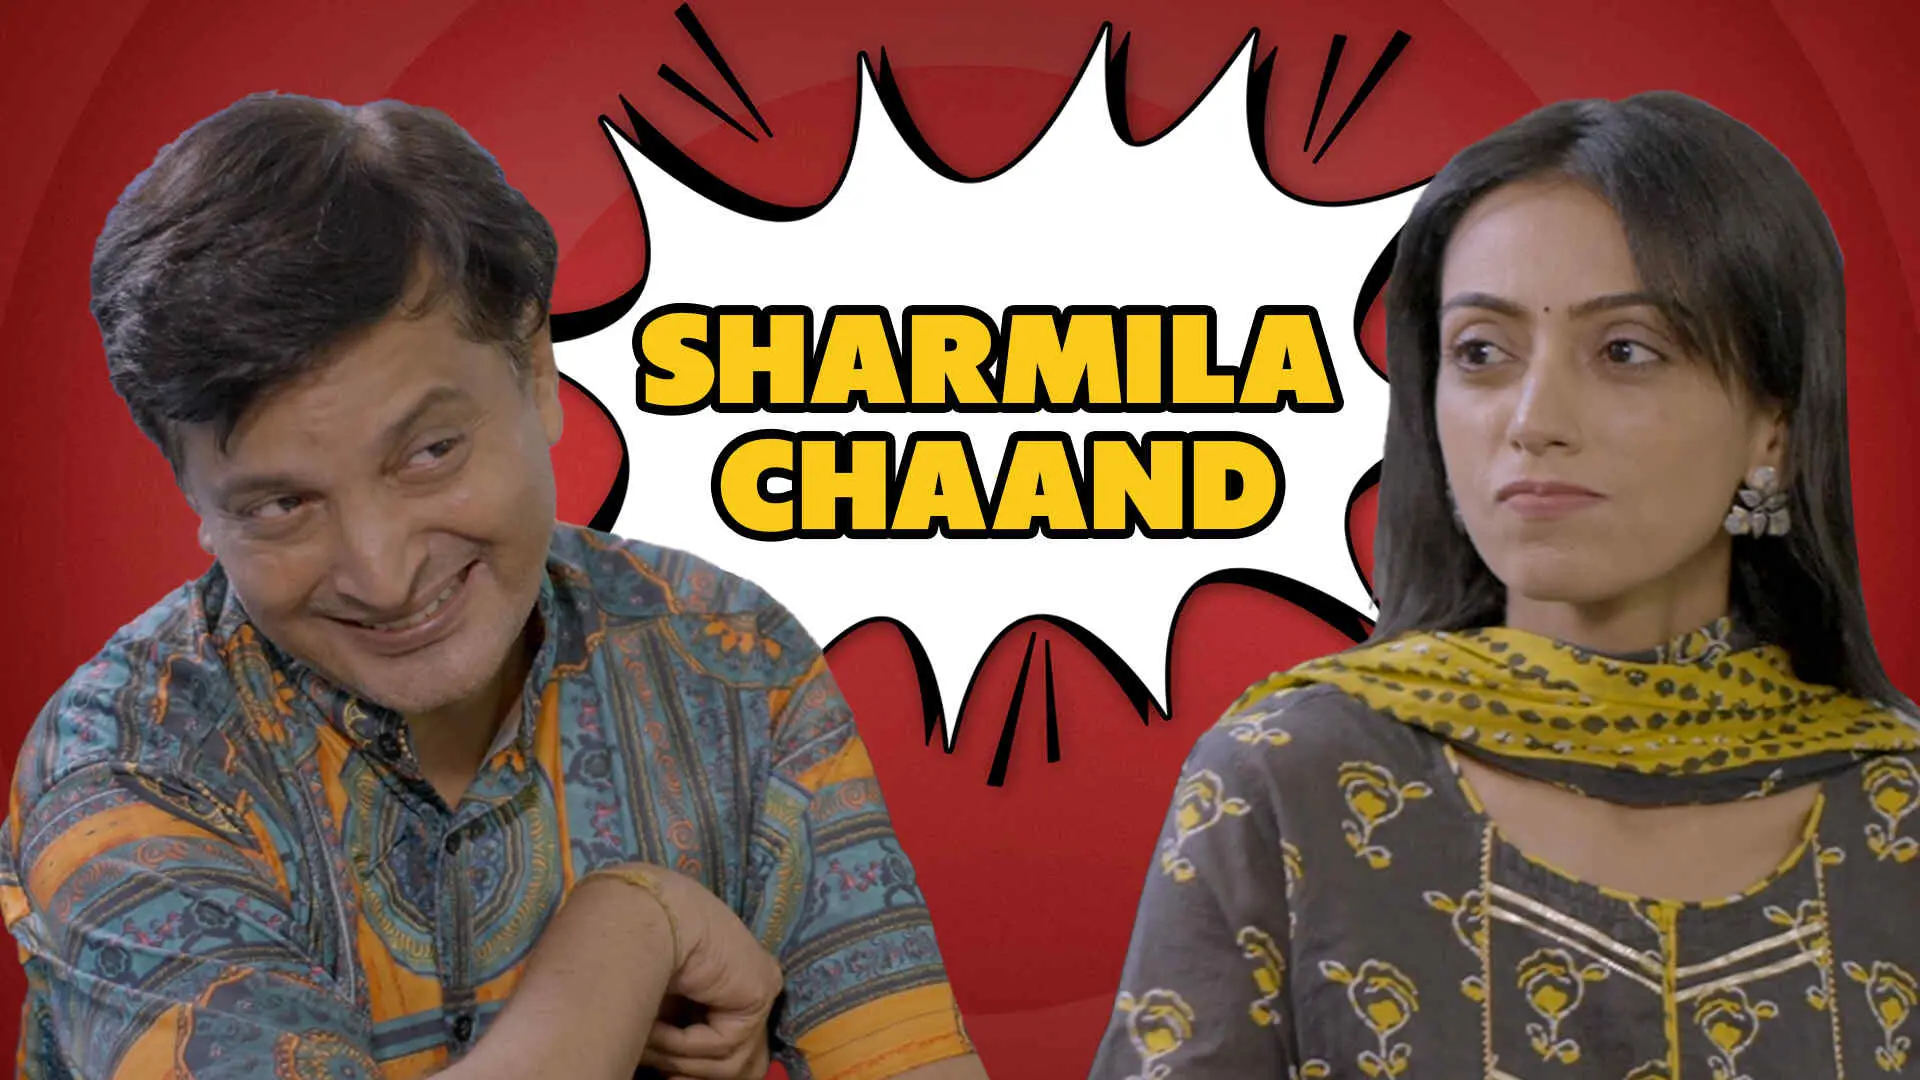 Sharmila Chaand